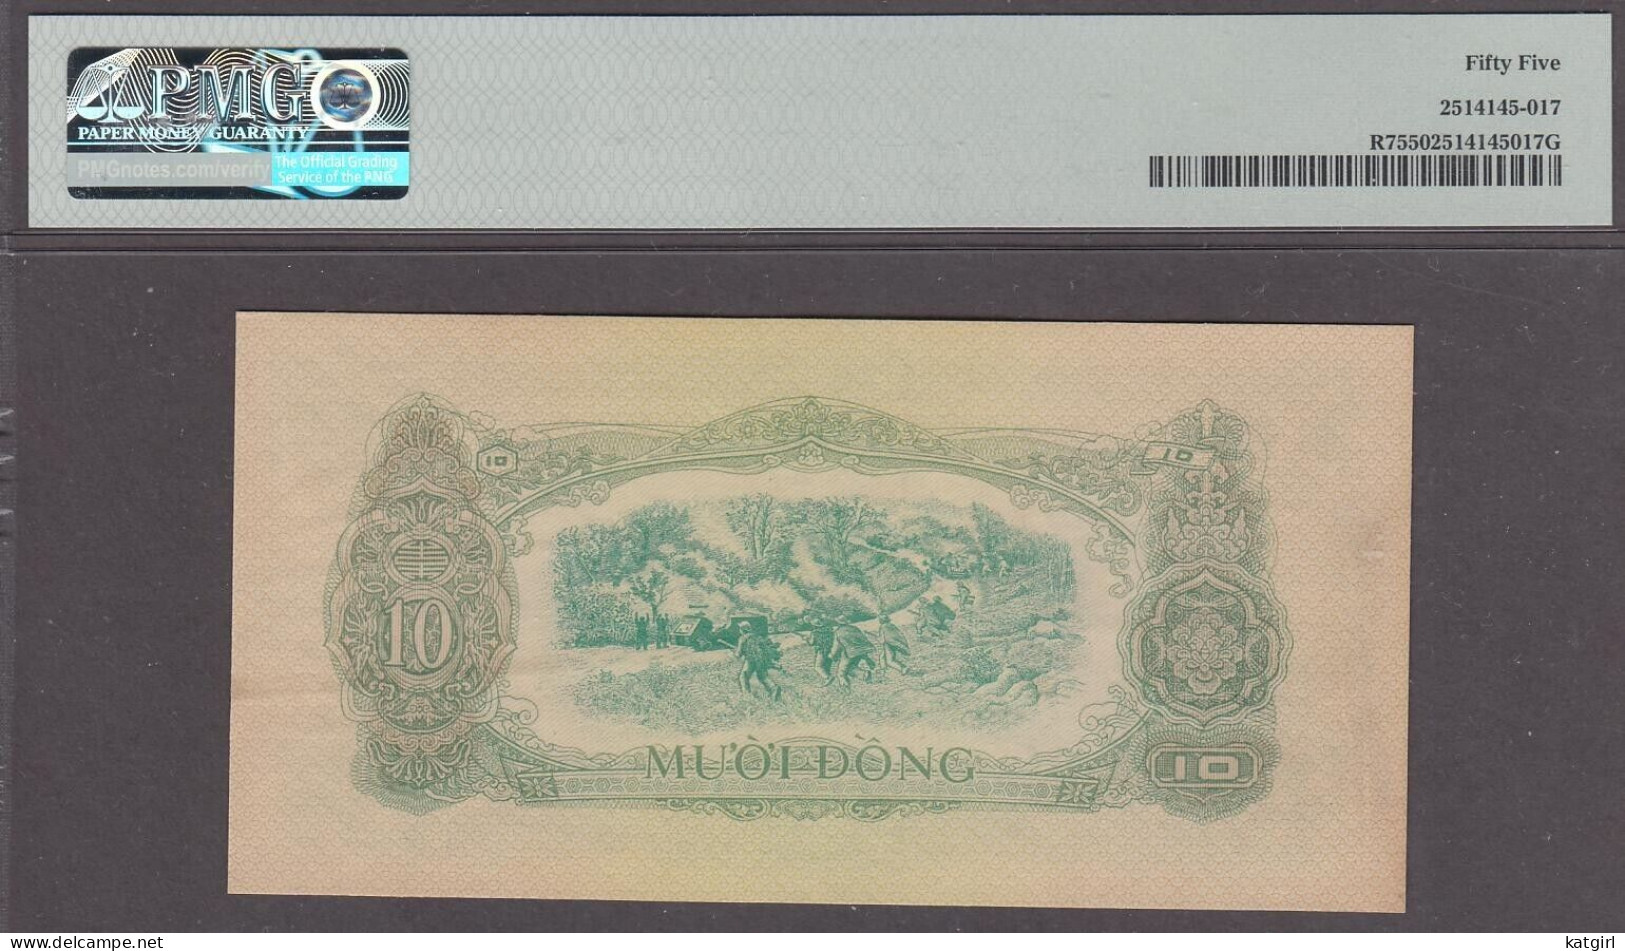 South Vietnam 10 Dong Banknote P-R7 ND 1963 AUNC PMG 55 - Vietnam